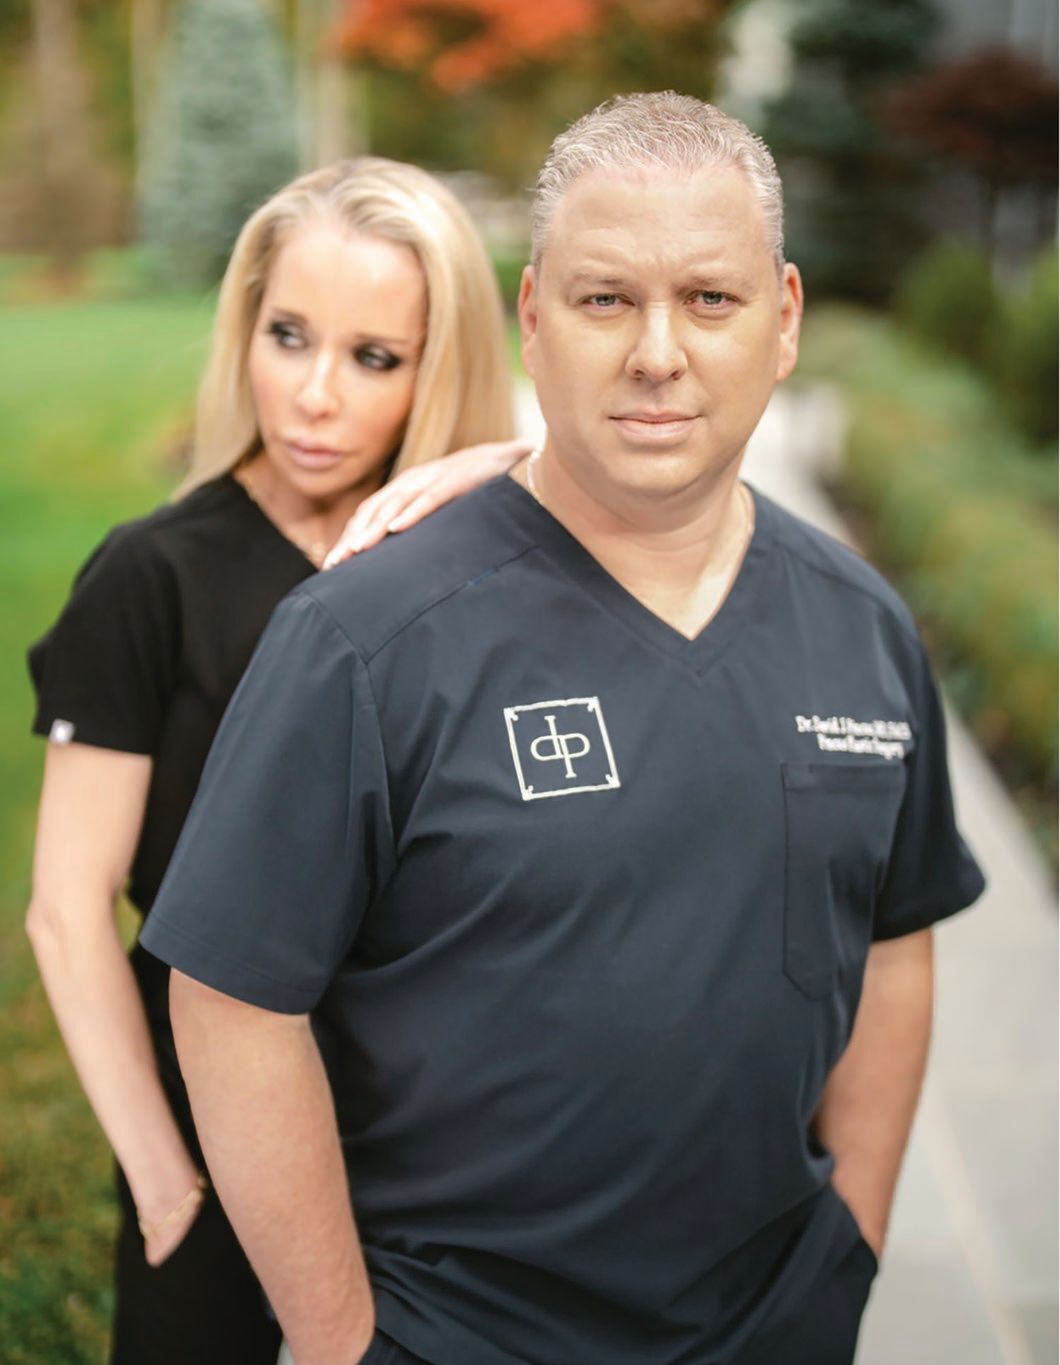 Dr. David Pincus and his fiancee, Ekaterina Ward PHOTO COURTESY OF BRAND